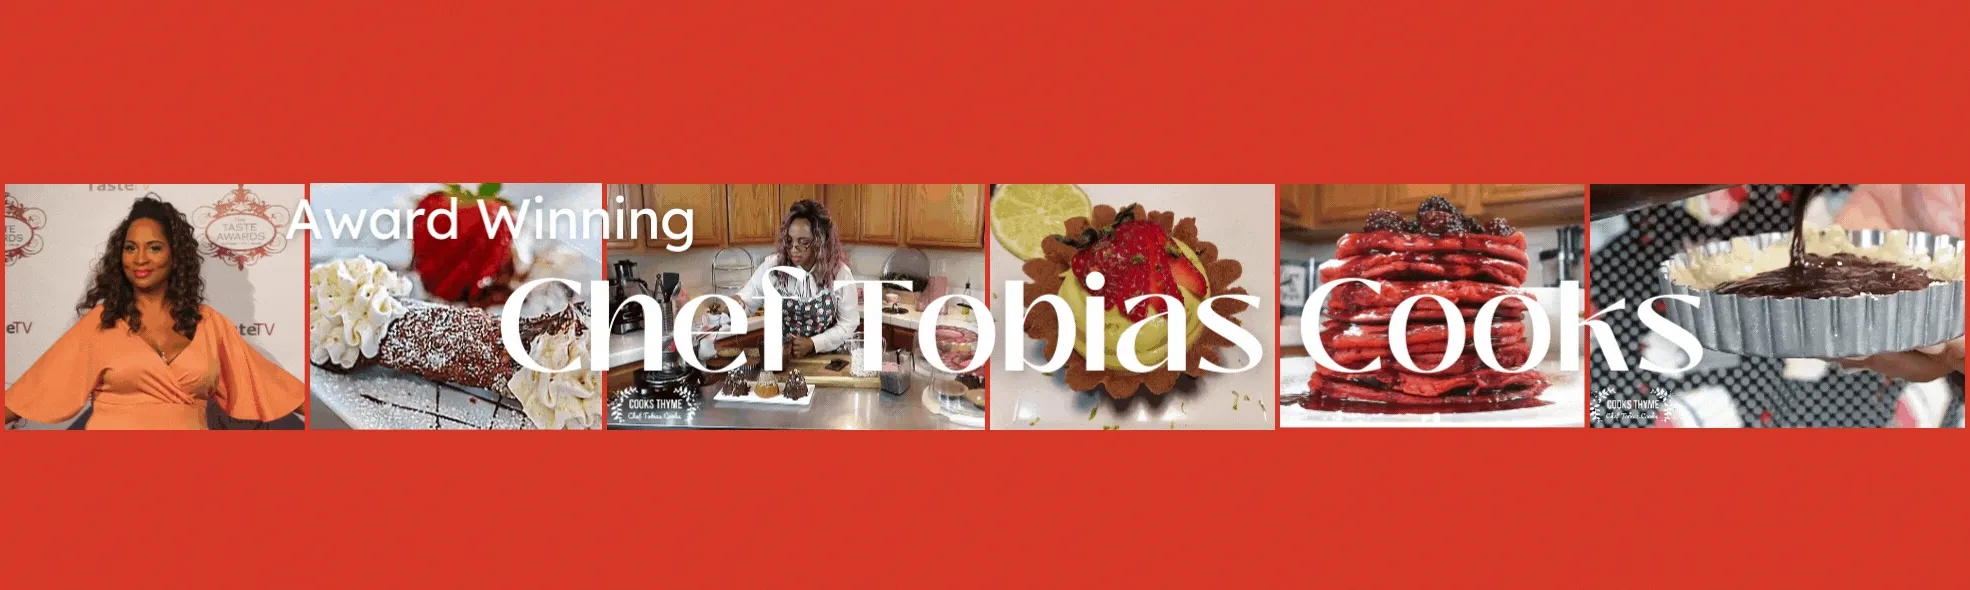 ChefTobiasCooks banner